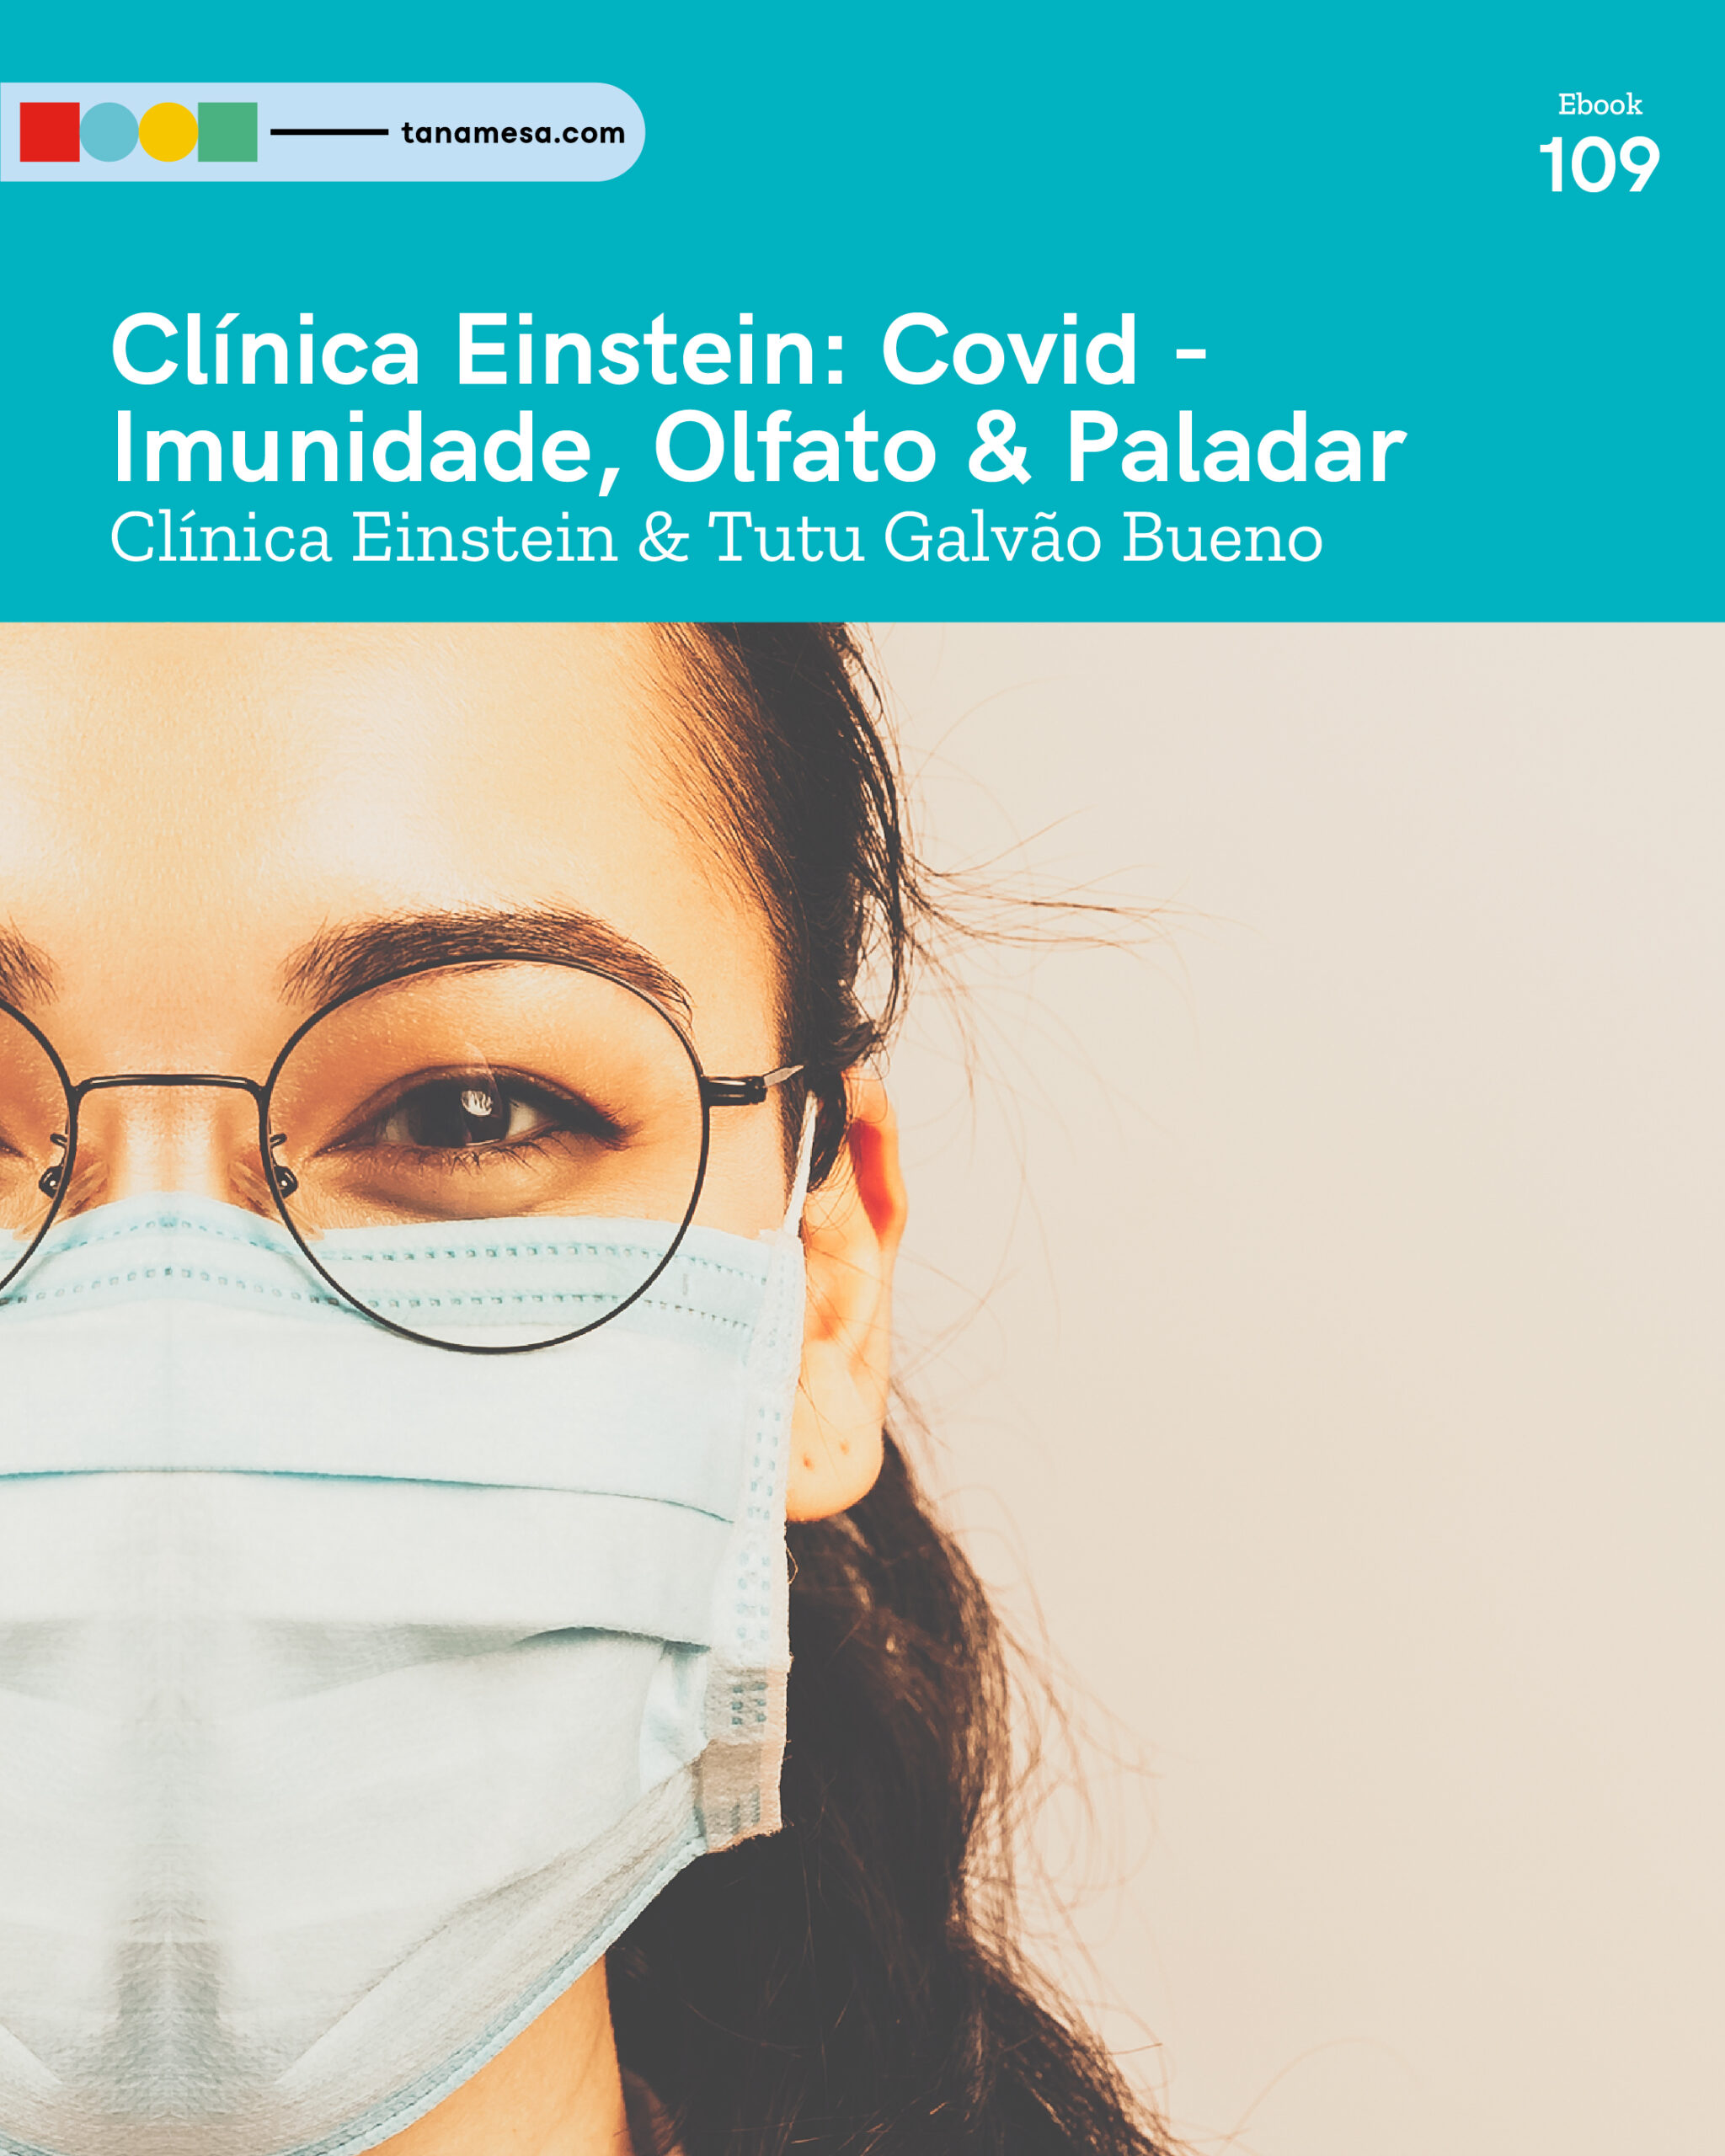 Clínica Einstein Covid - Imunidade, Olfato & Paladar